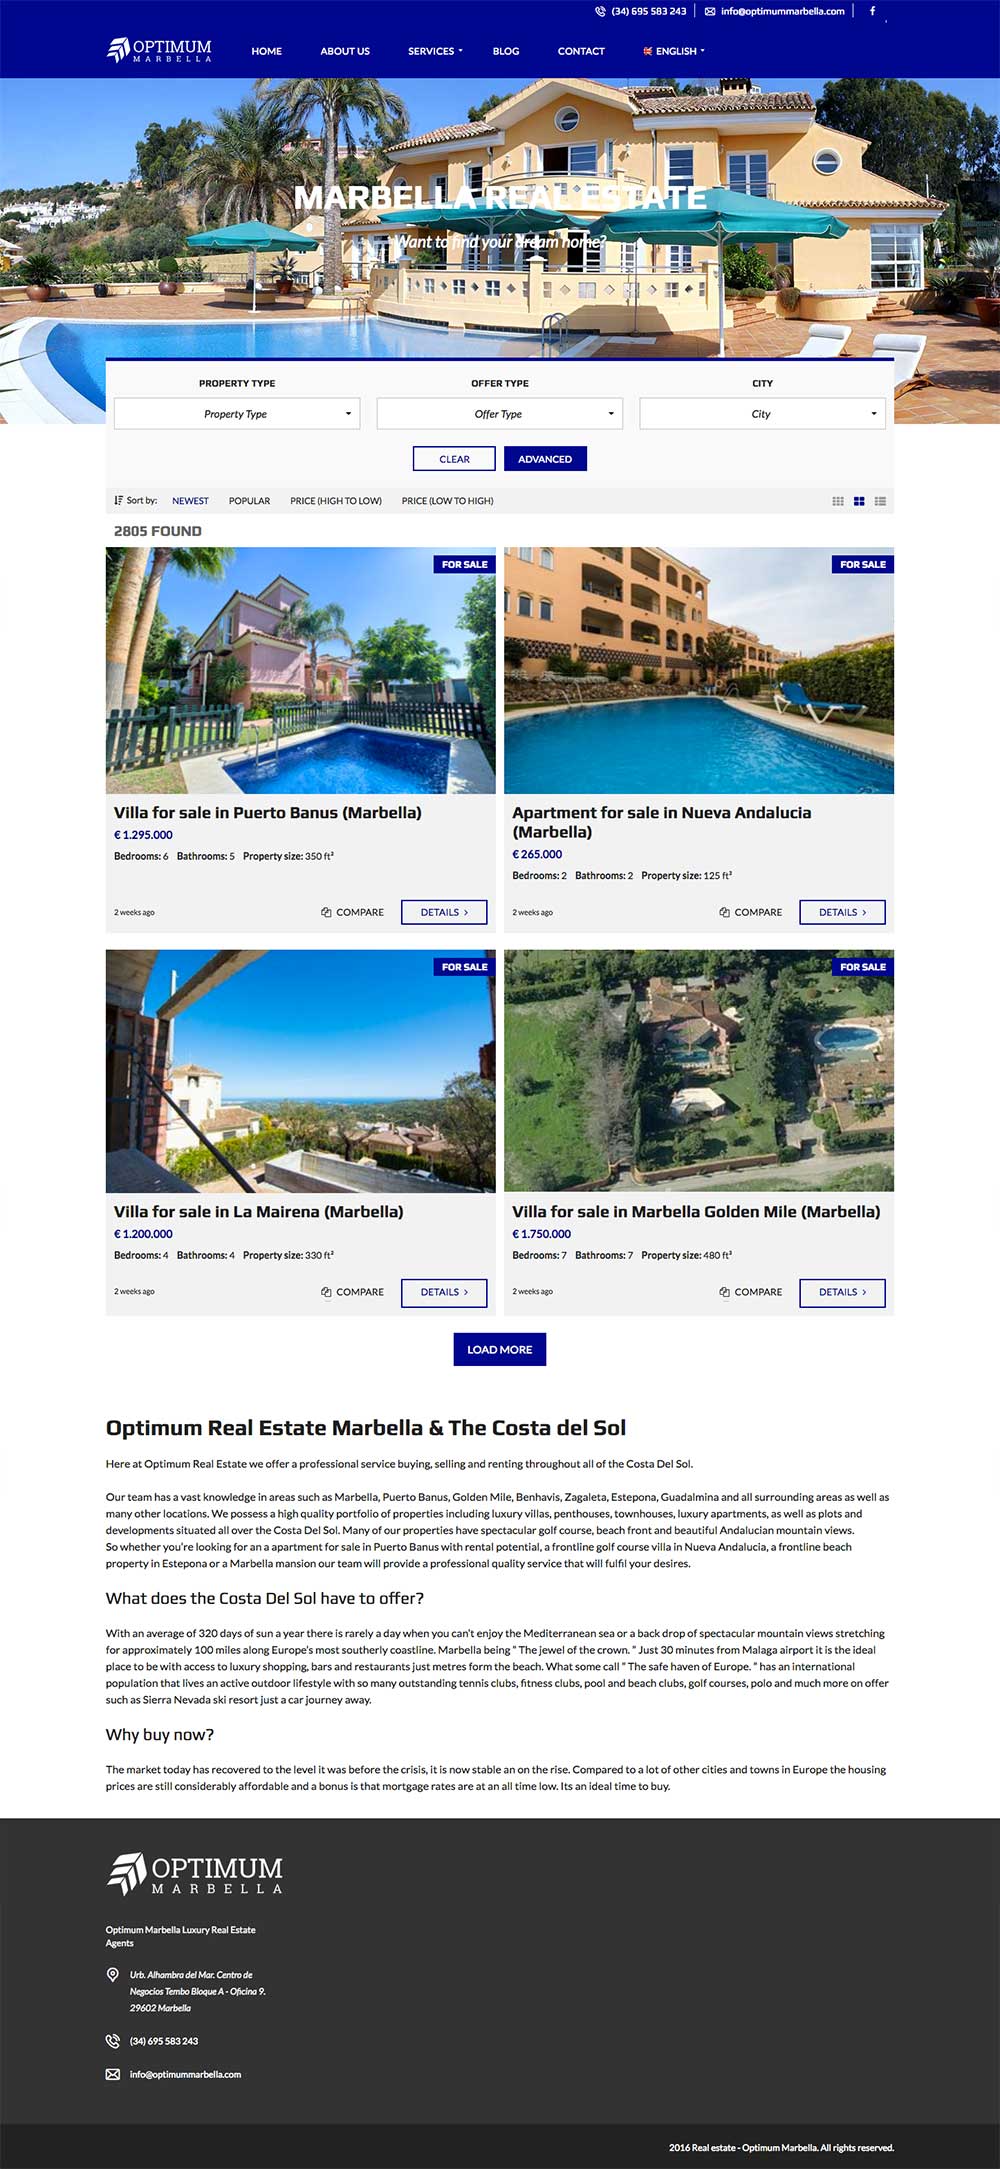 WordPress Real Estate Websites 2018 property-listing-wordpress-real-estate-marbella-milenio-plus-feed